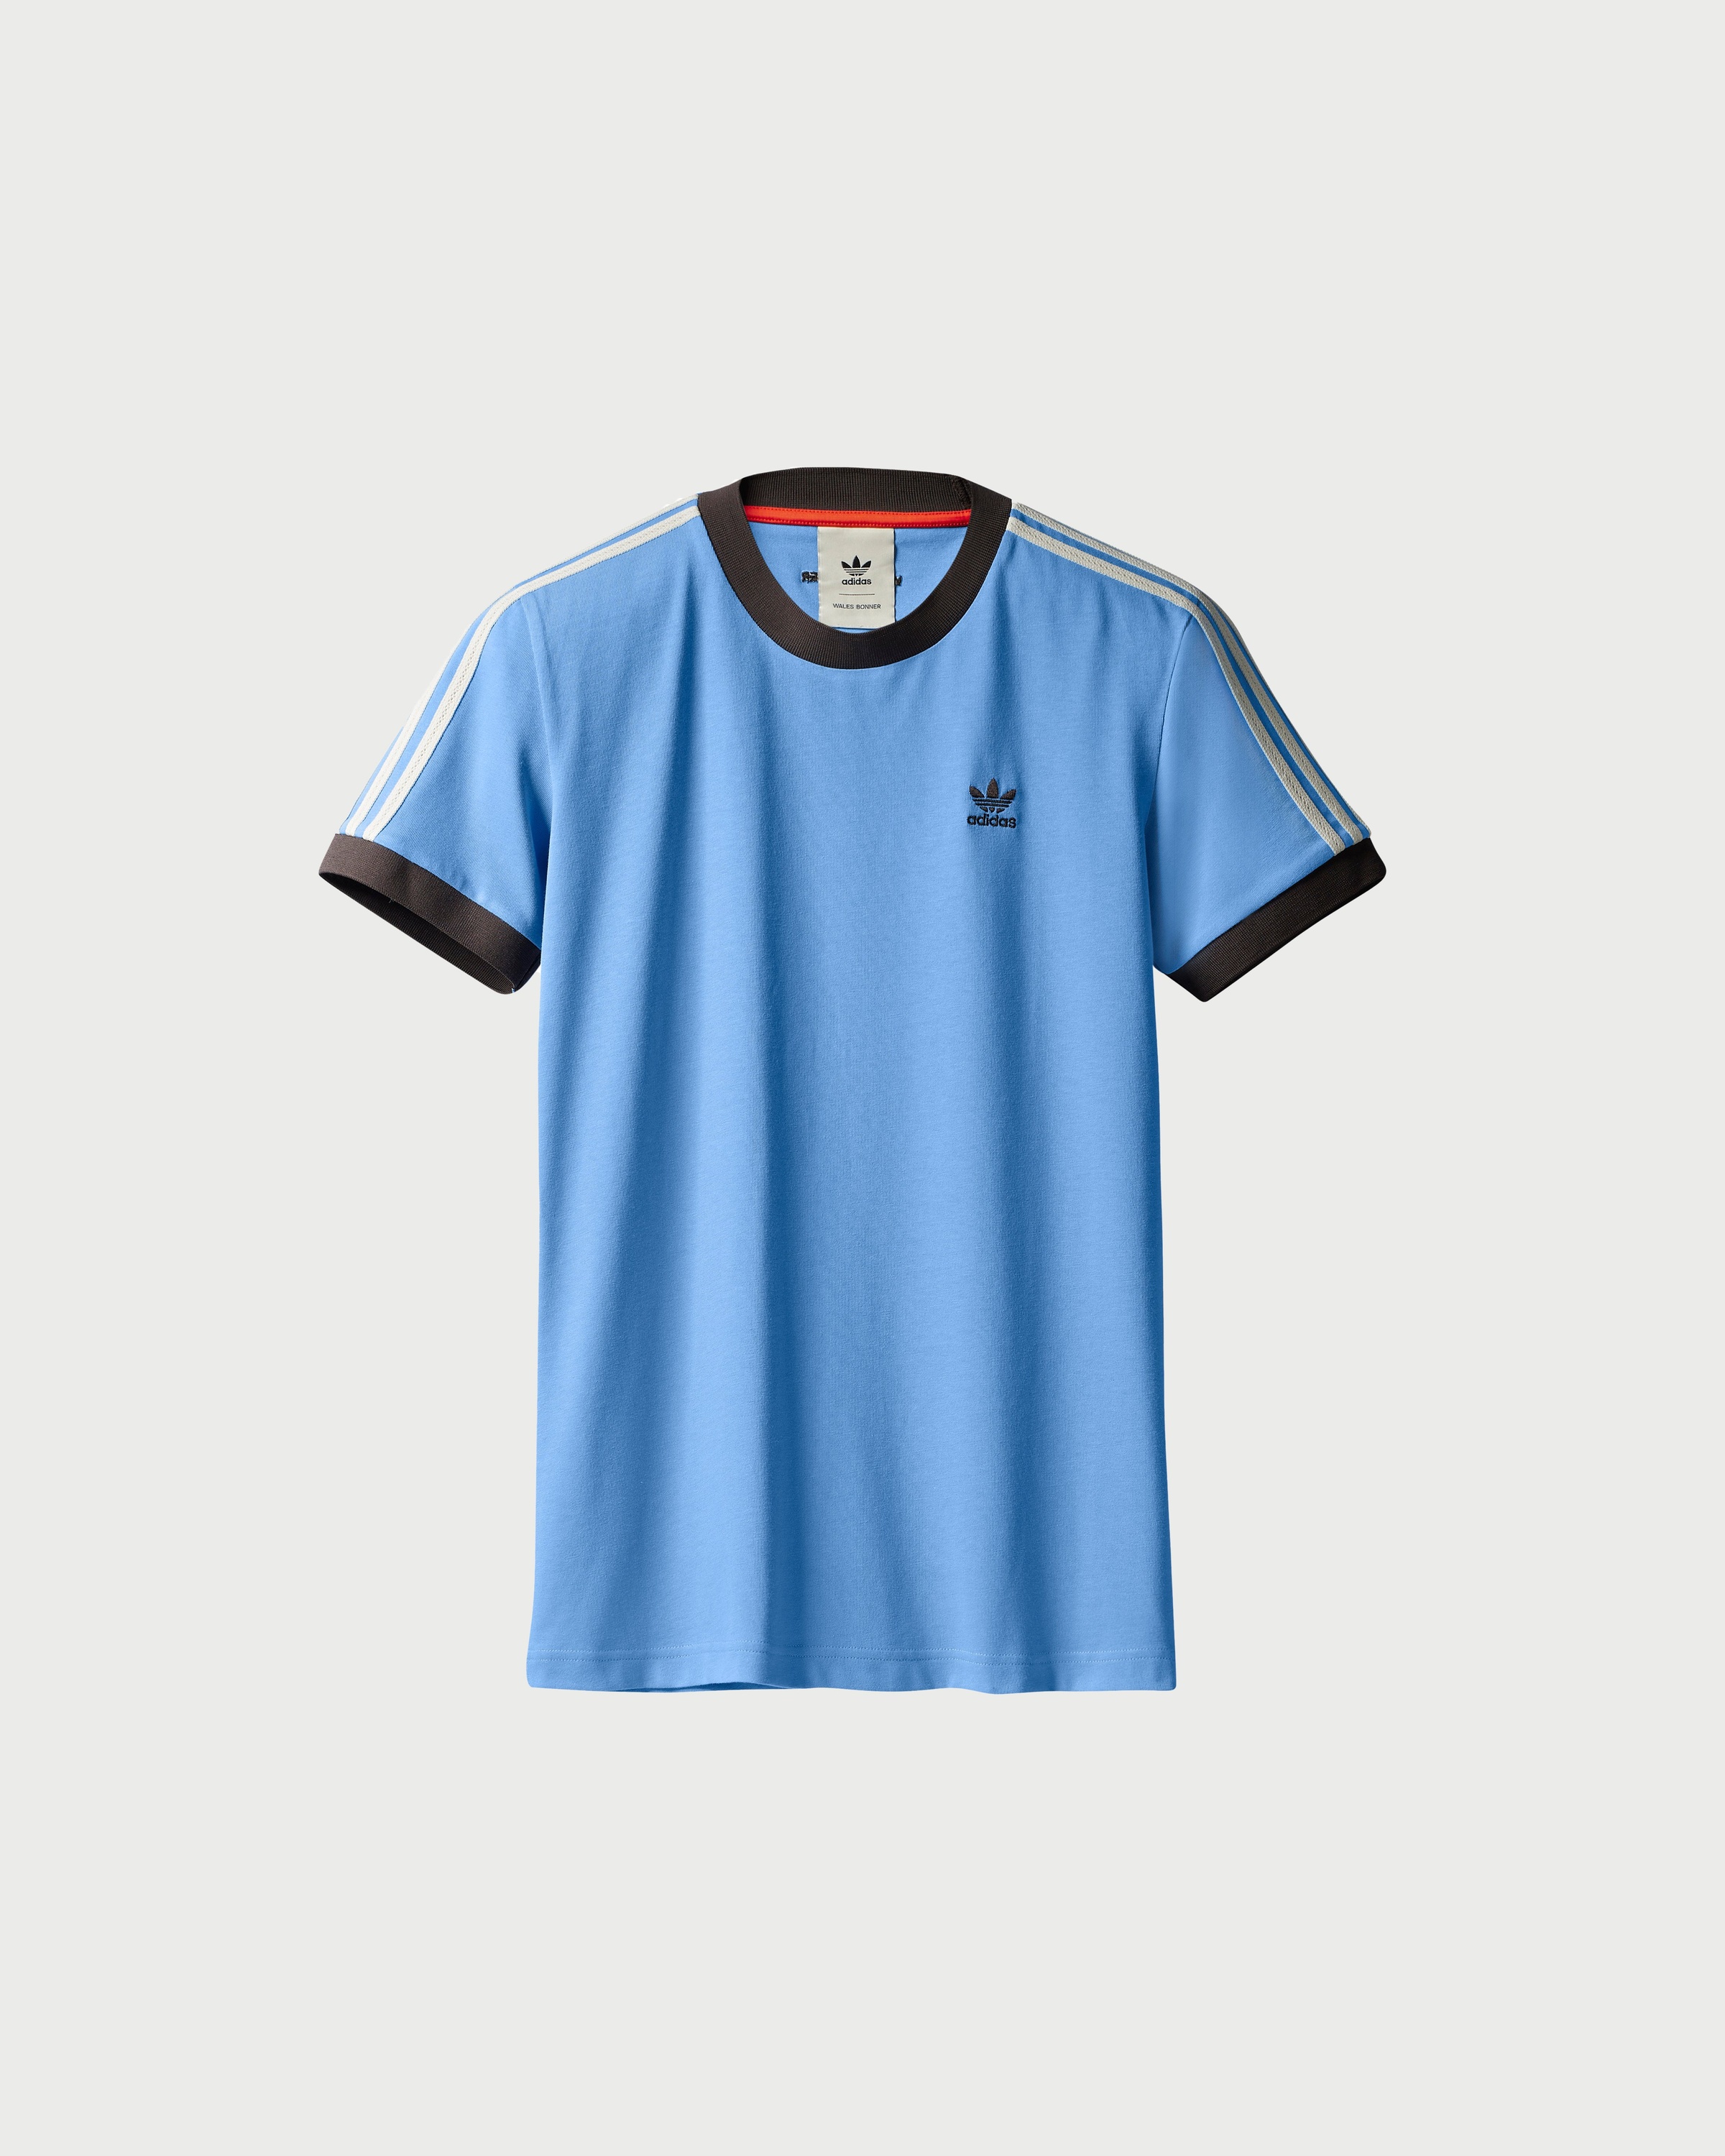 Adidas x Wales Bonner – Tee Light Blue - T-shirts - Blue - Image 1